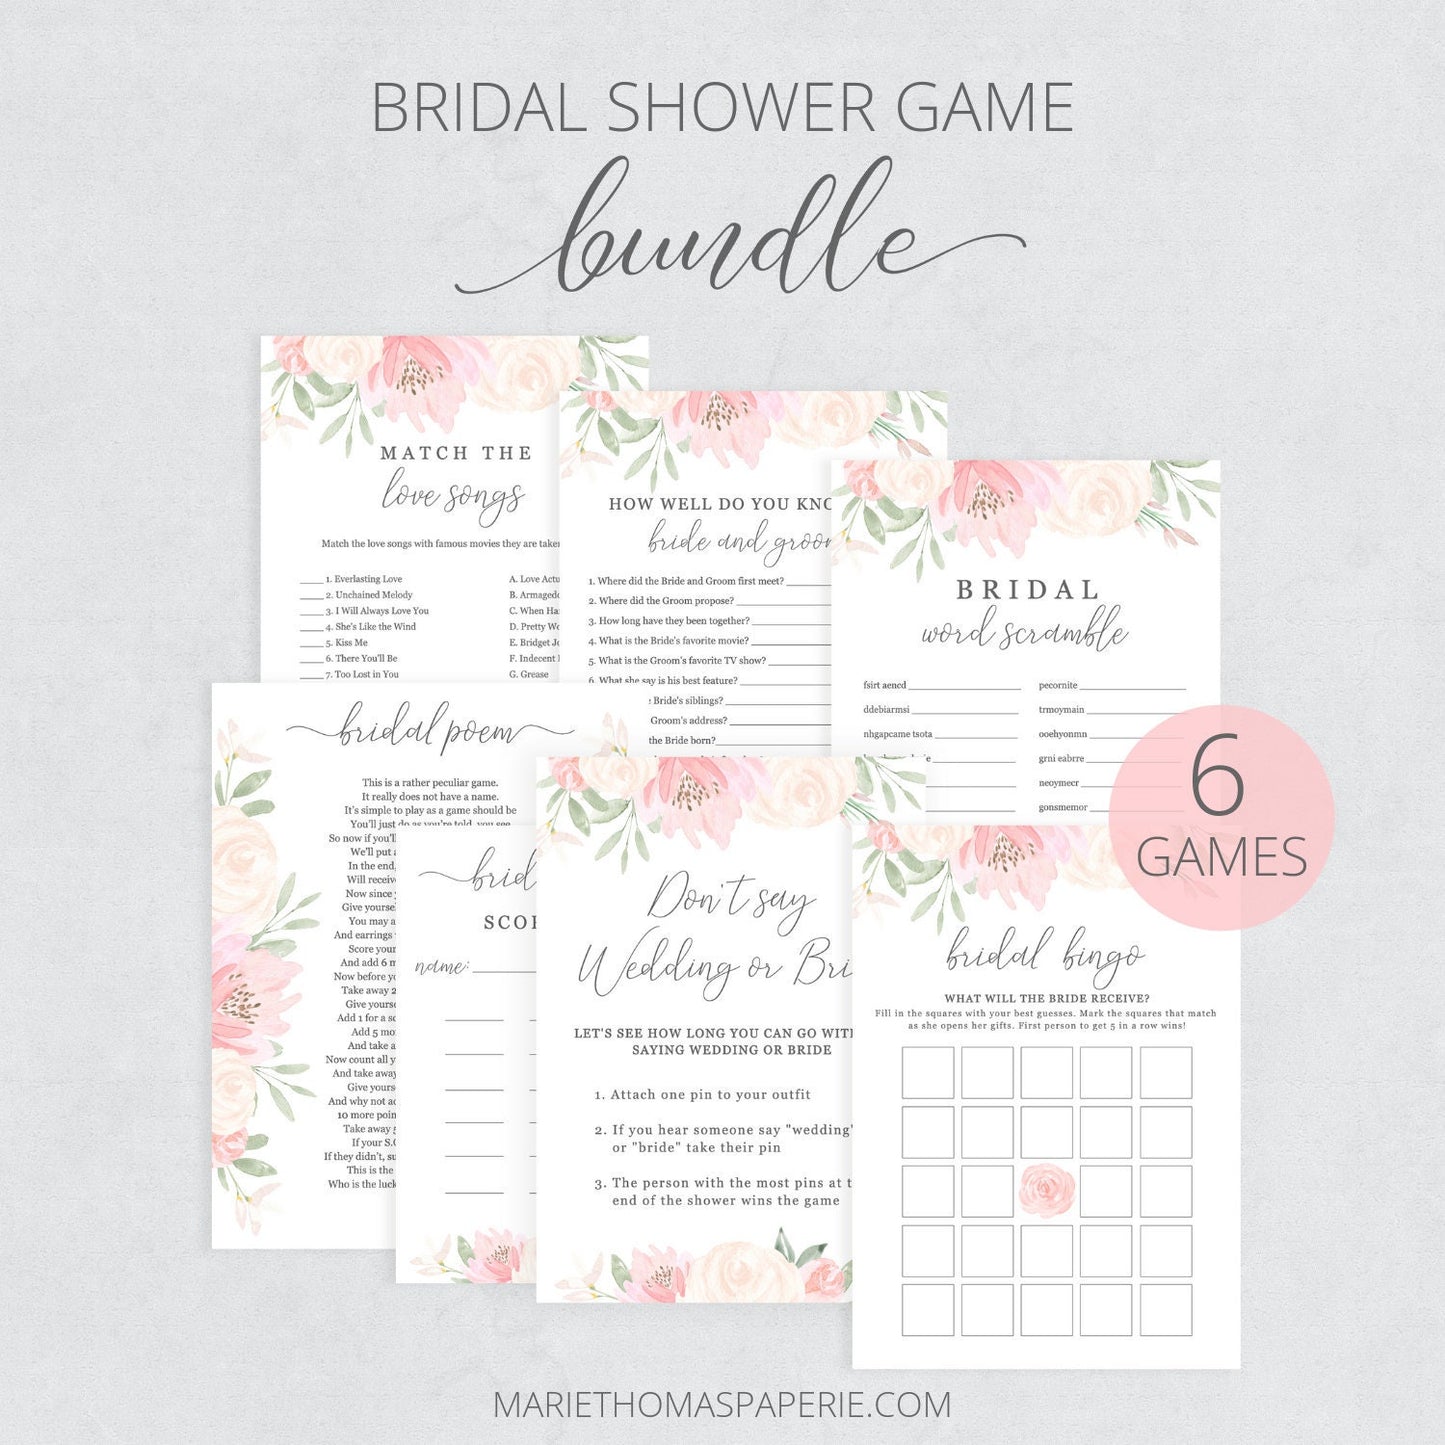 Editable Bridal Shower Games Bundle Bridal Shower Games Bridal Shower Bingo How Well Do You Know the Bride Template